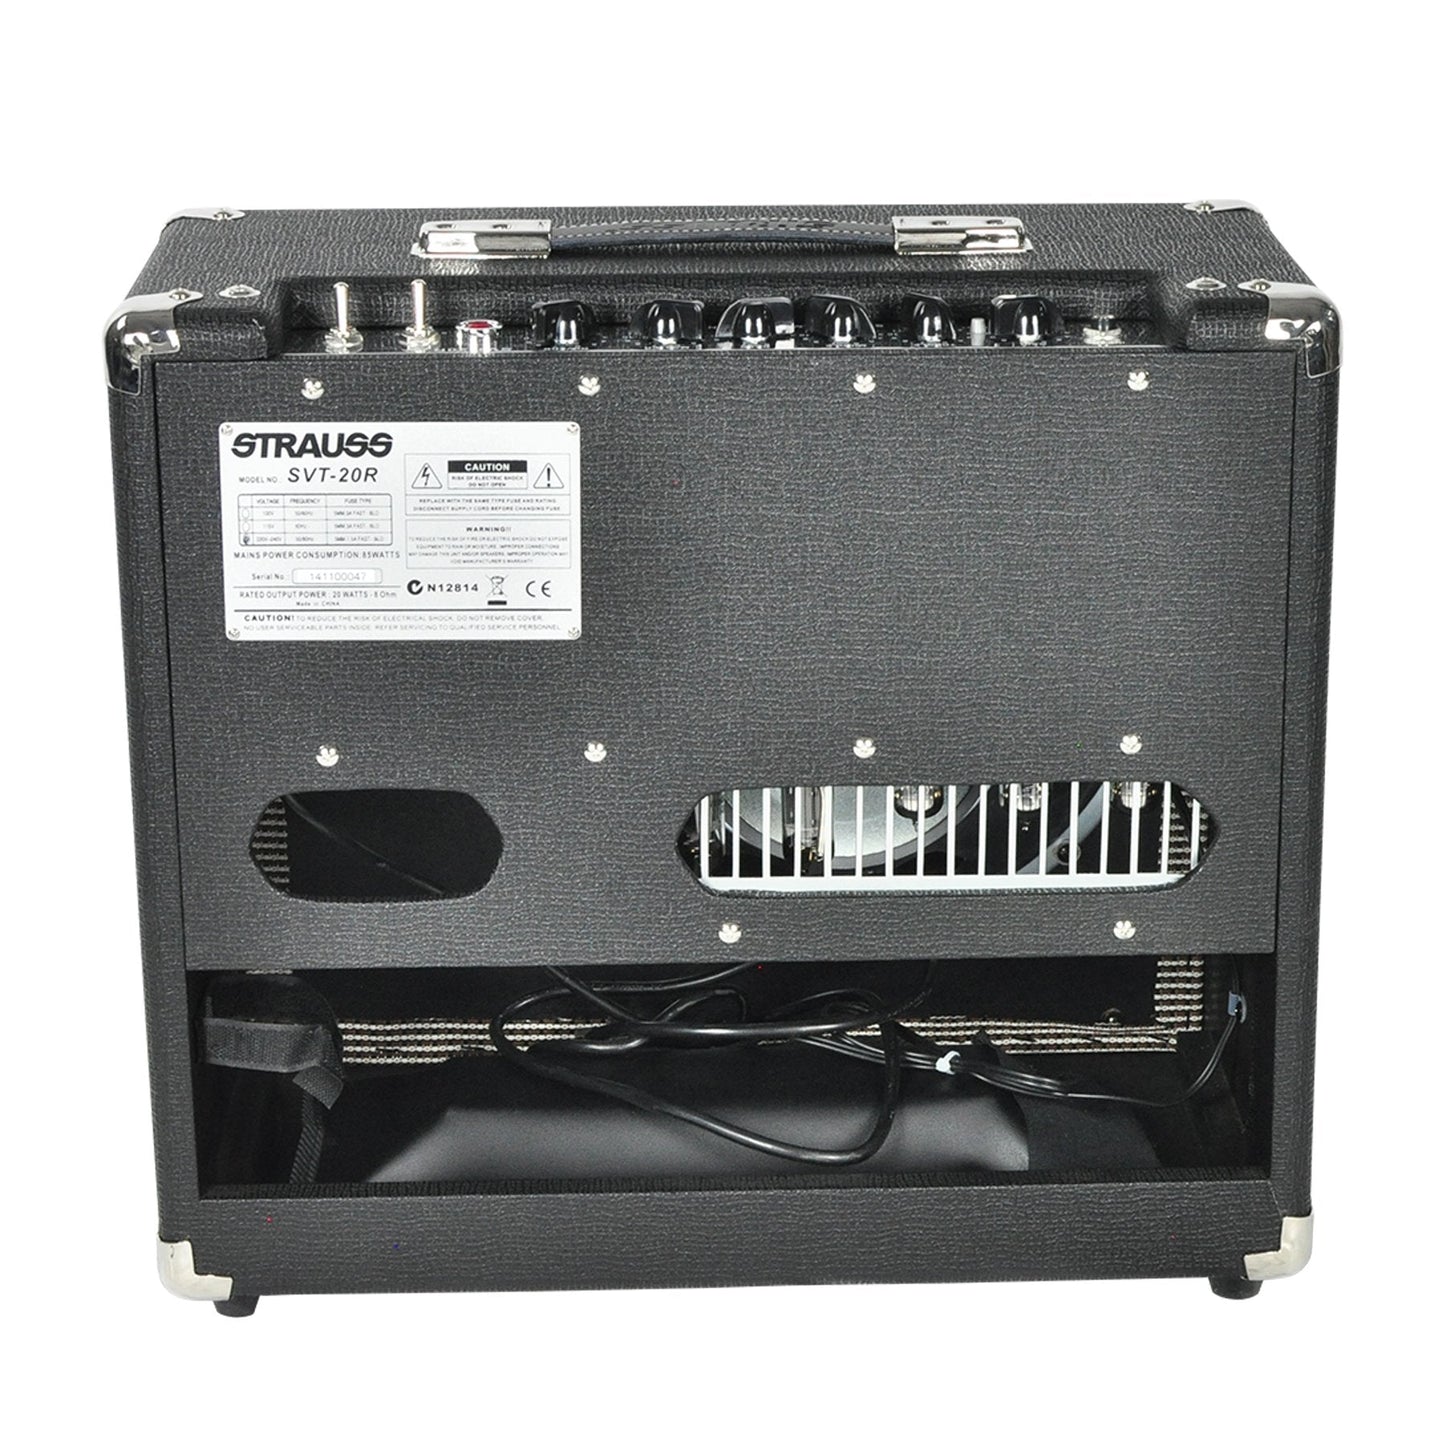 Strauss SVT-20R 20 Watt Combo Valve Amplifier with Reverb (Black)